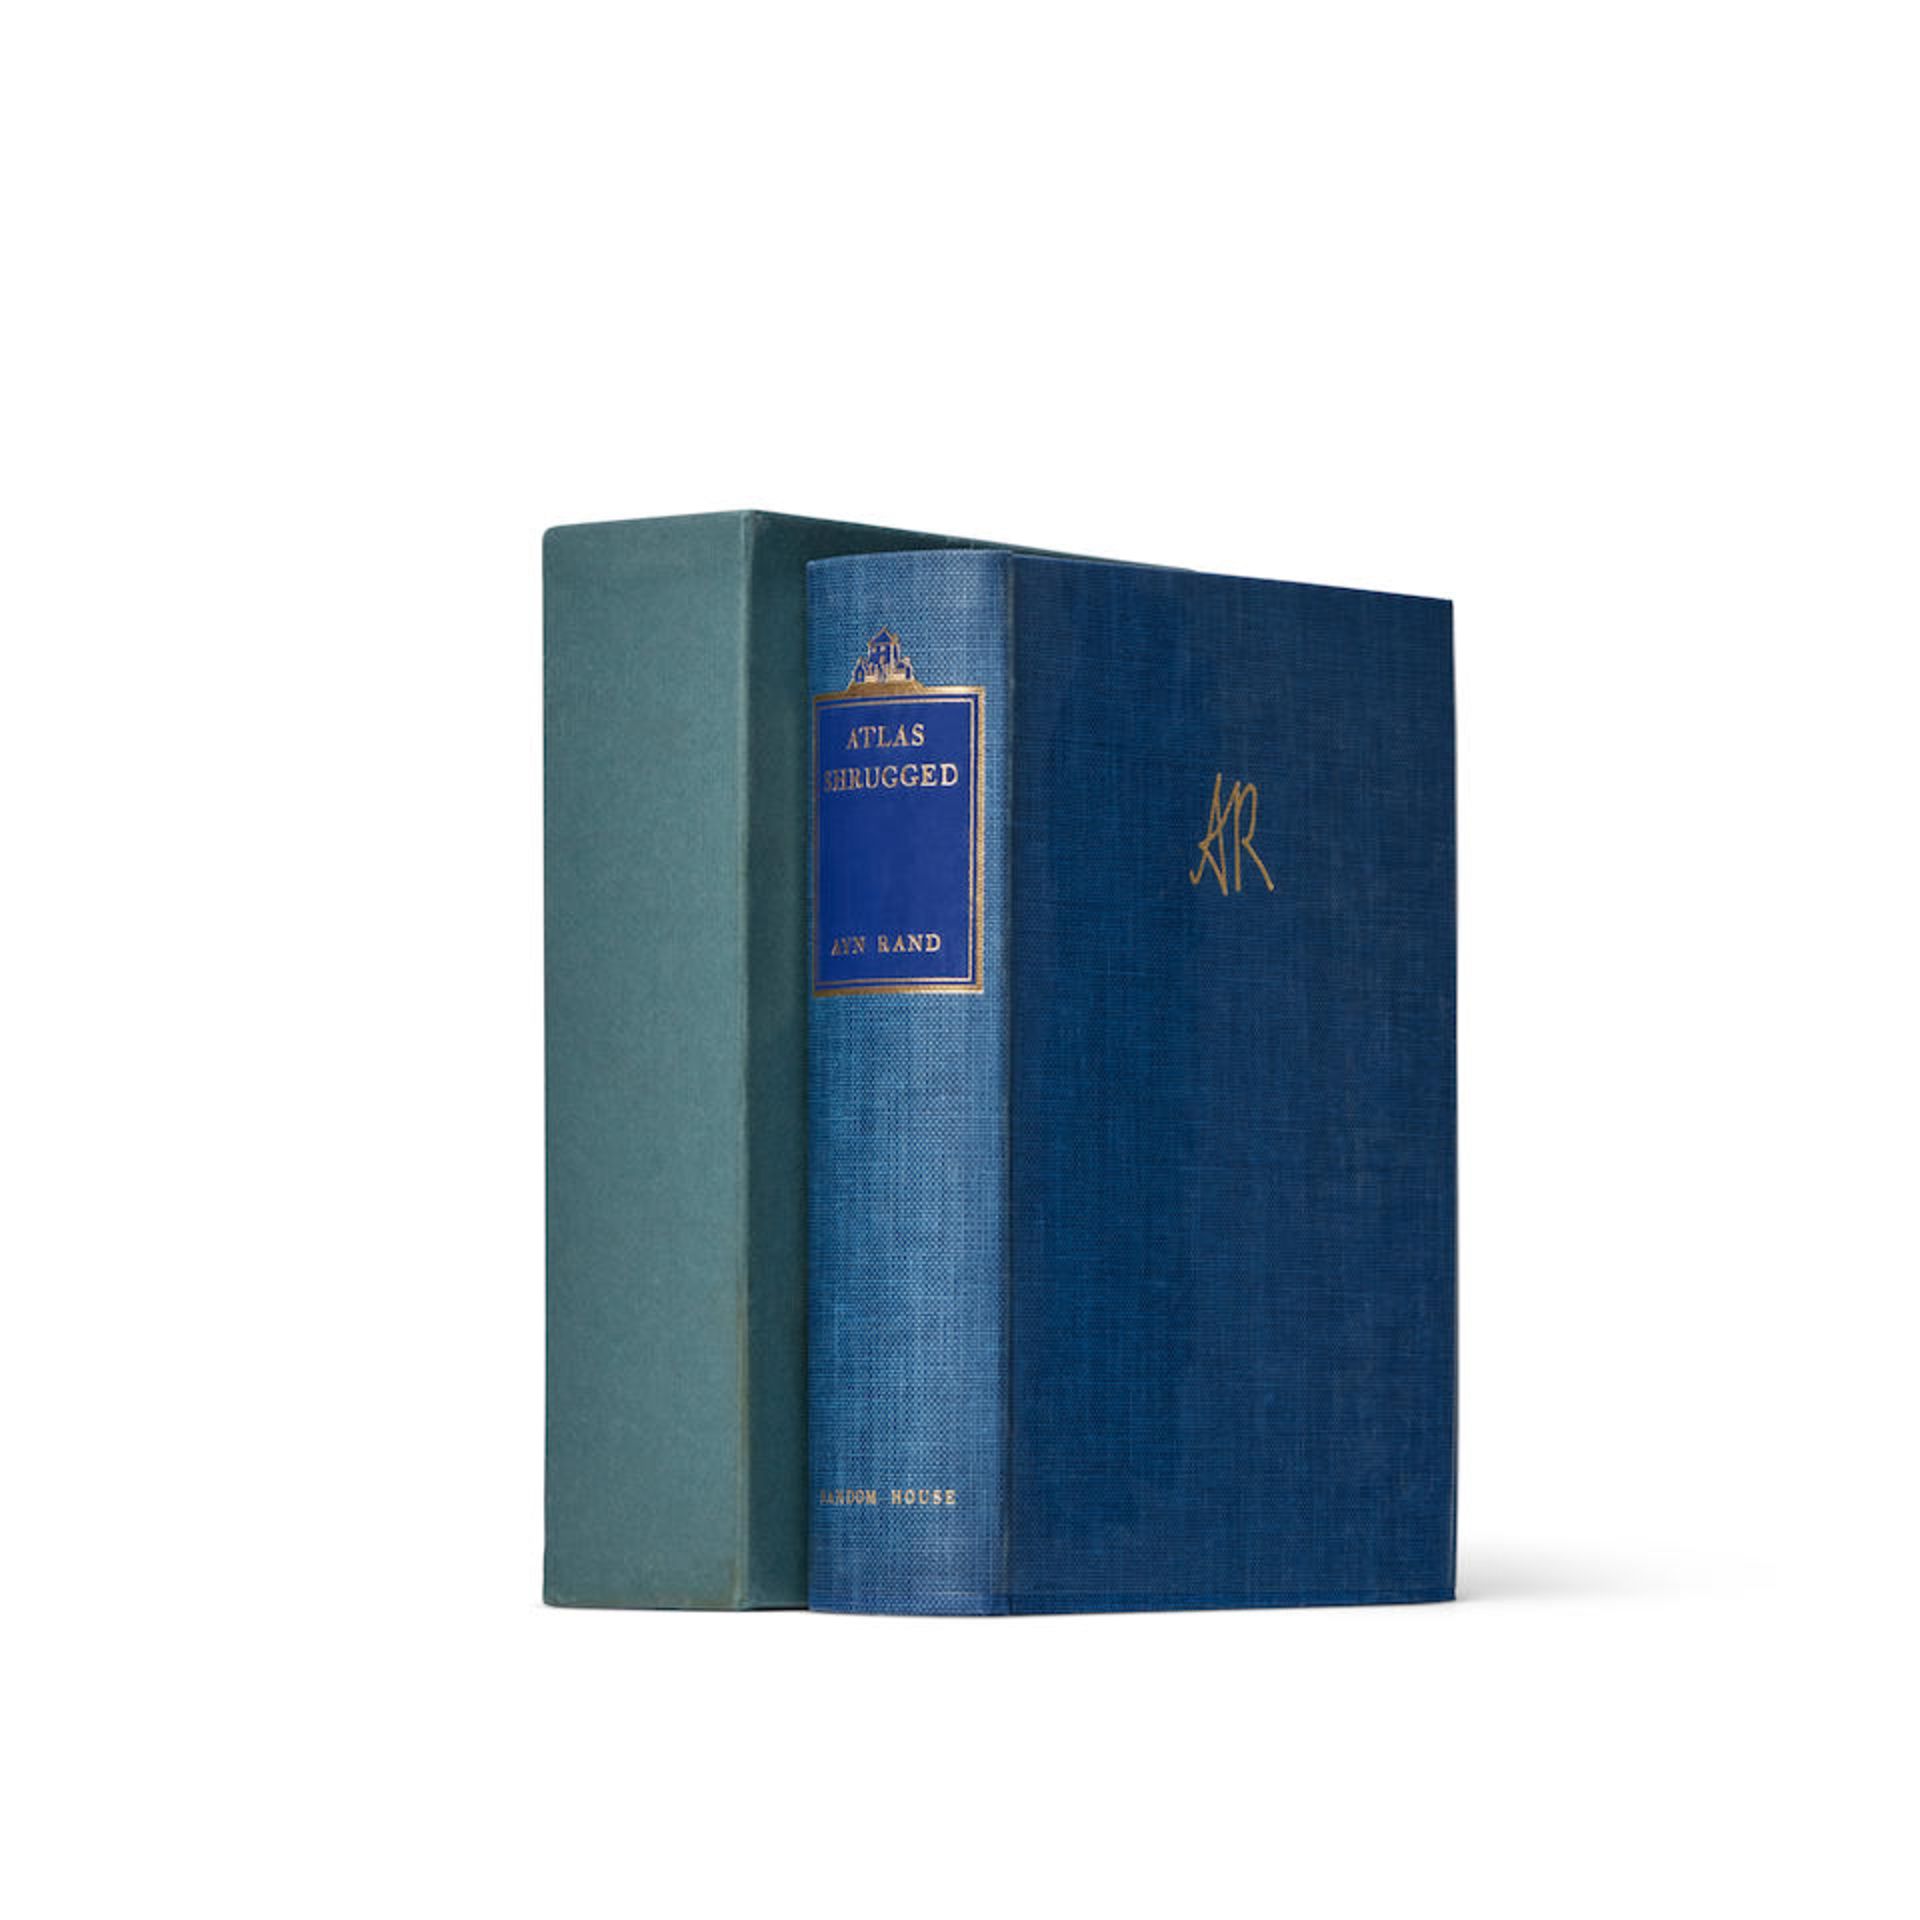 RAND, AYN. 1905-1982. Atlas Shrugged. New York: Random House, 1967.